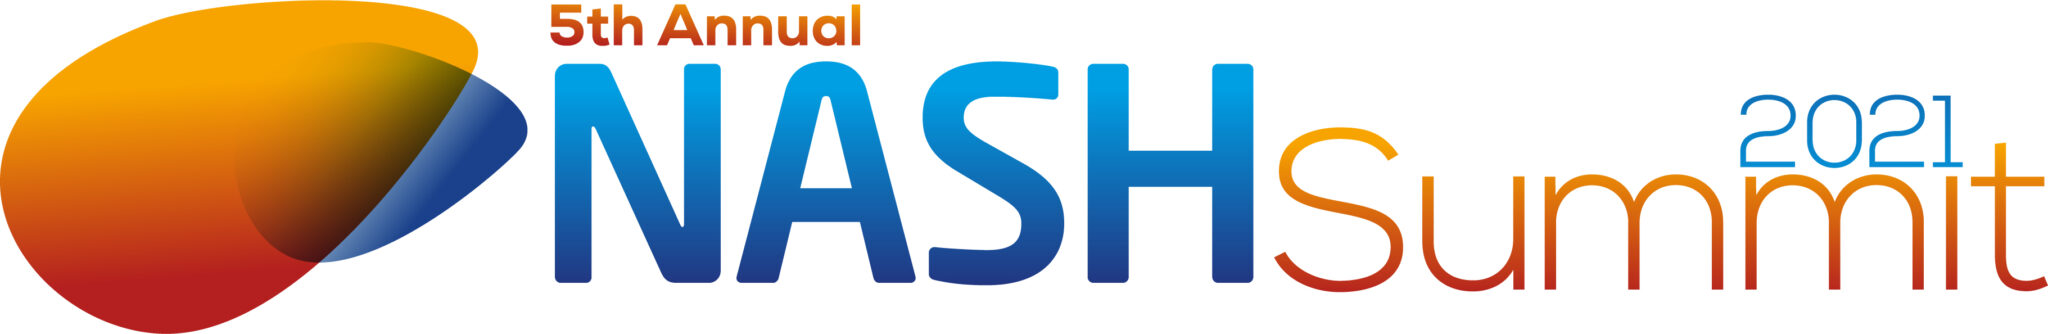 NASH-Boston-2021-logo-2048x334